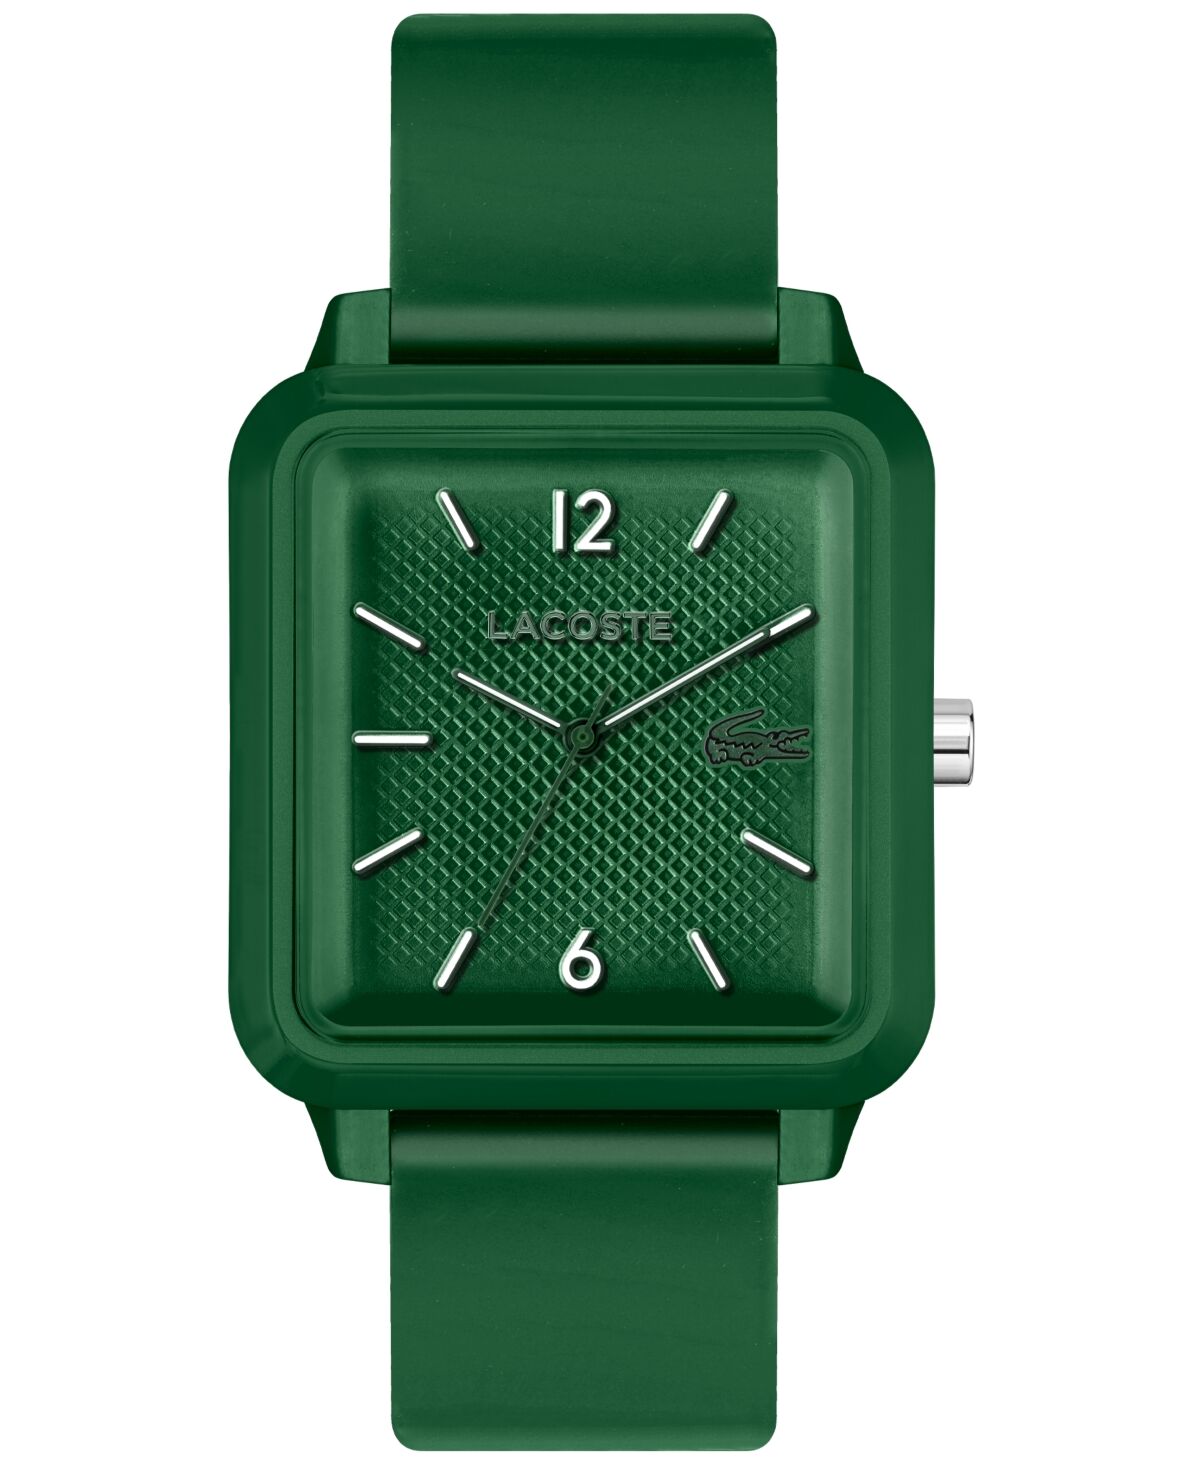 Lacoste Men's Studio Green Silicone Strap Watch 36mm x 38mm - Green